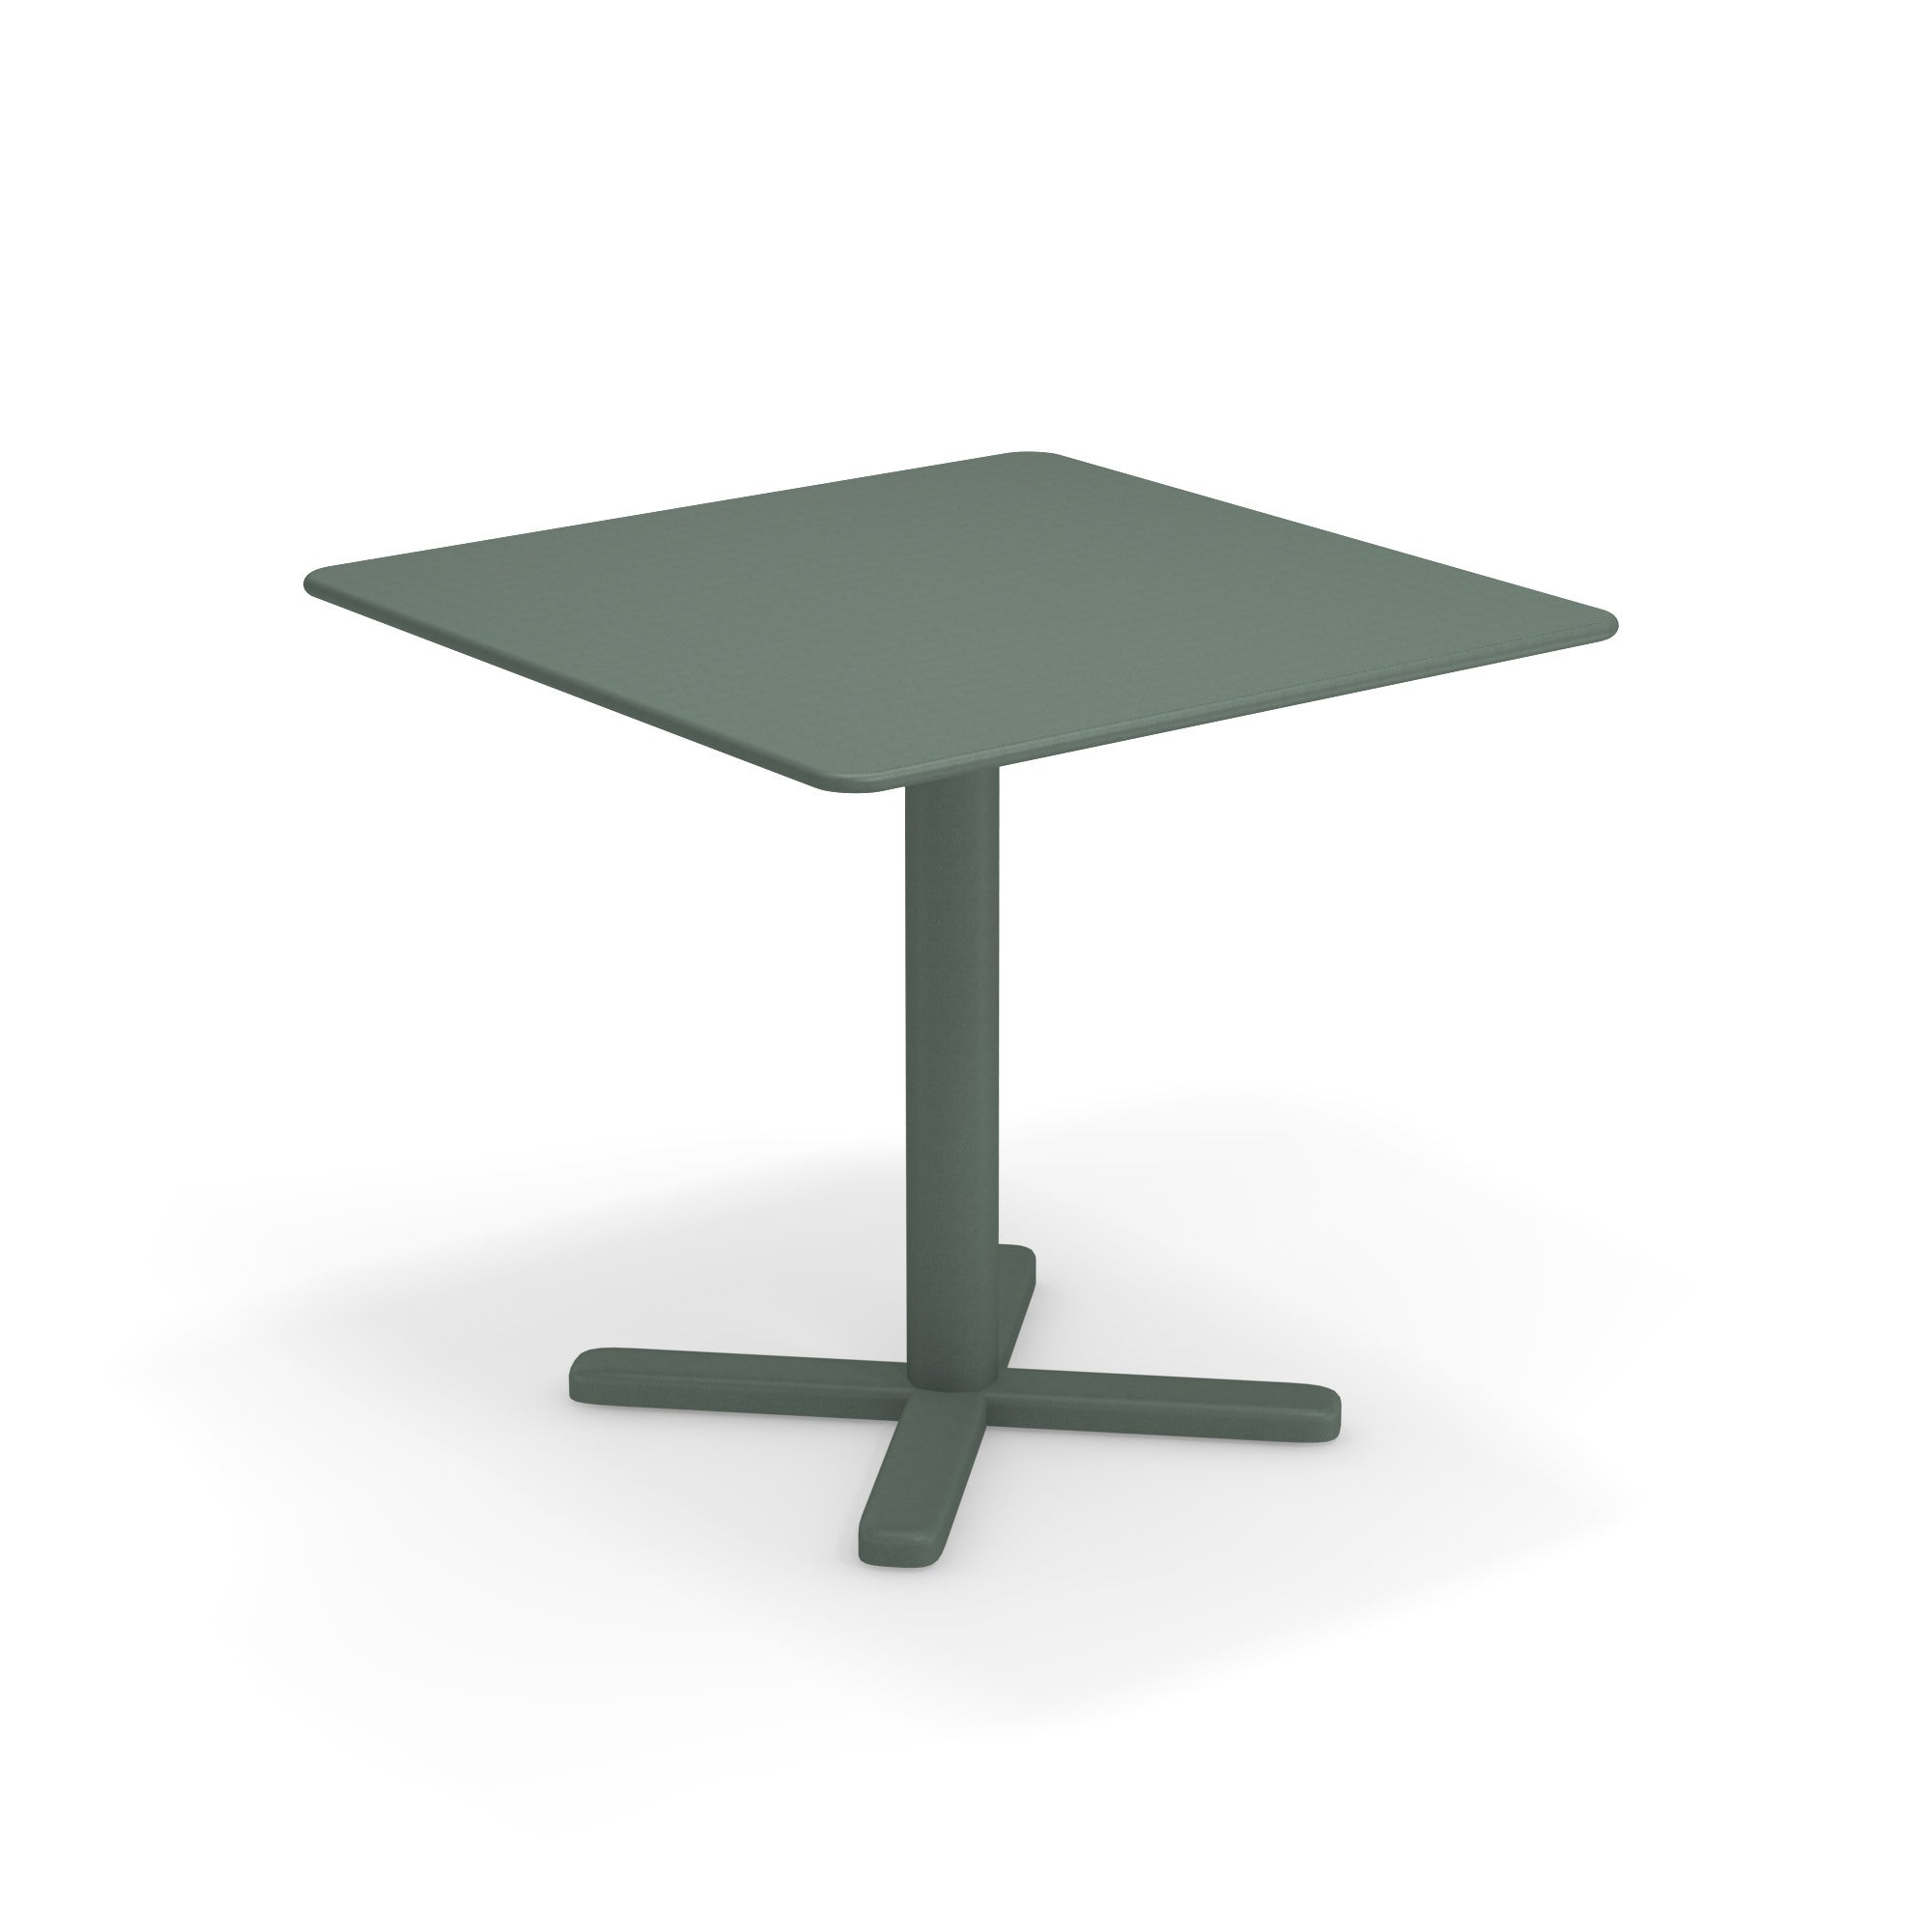 EMU Darwin Square Folding Table (2 Sizes)